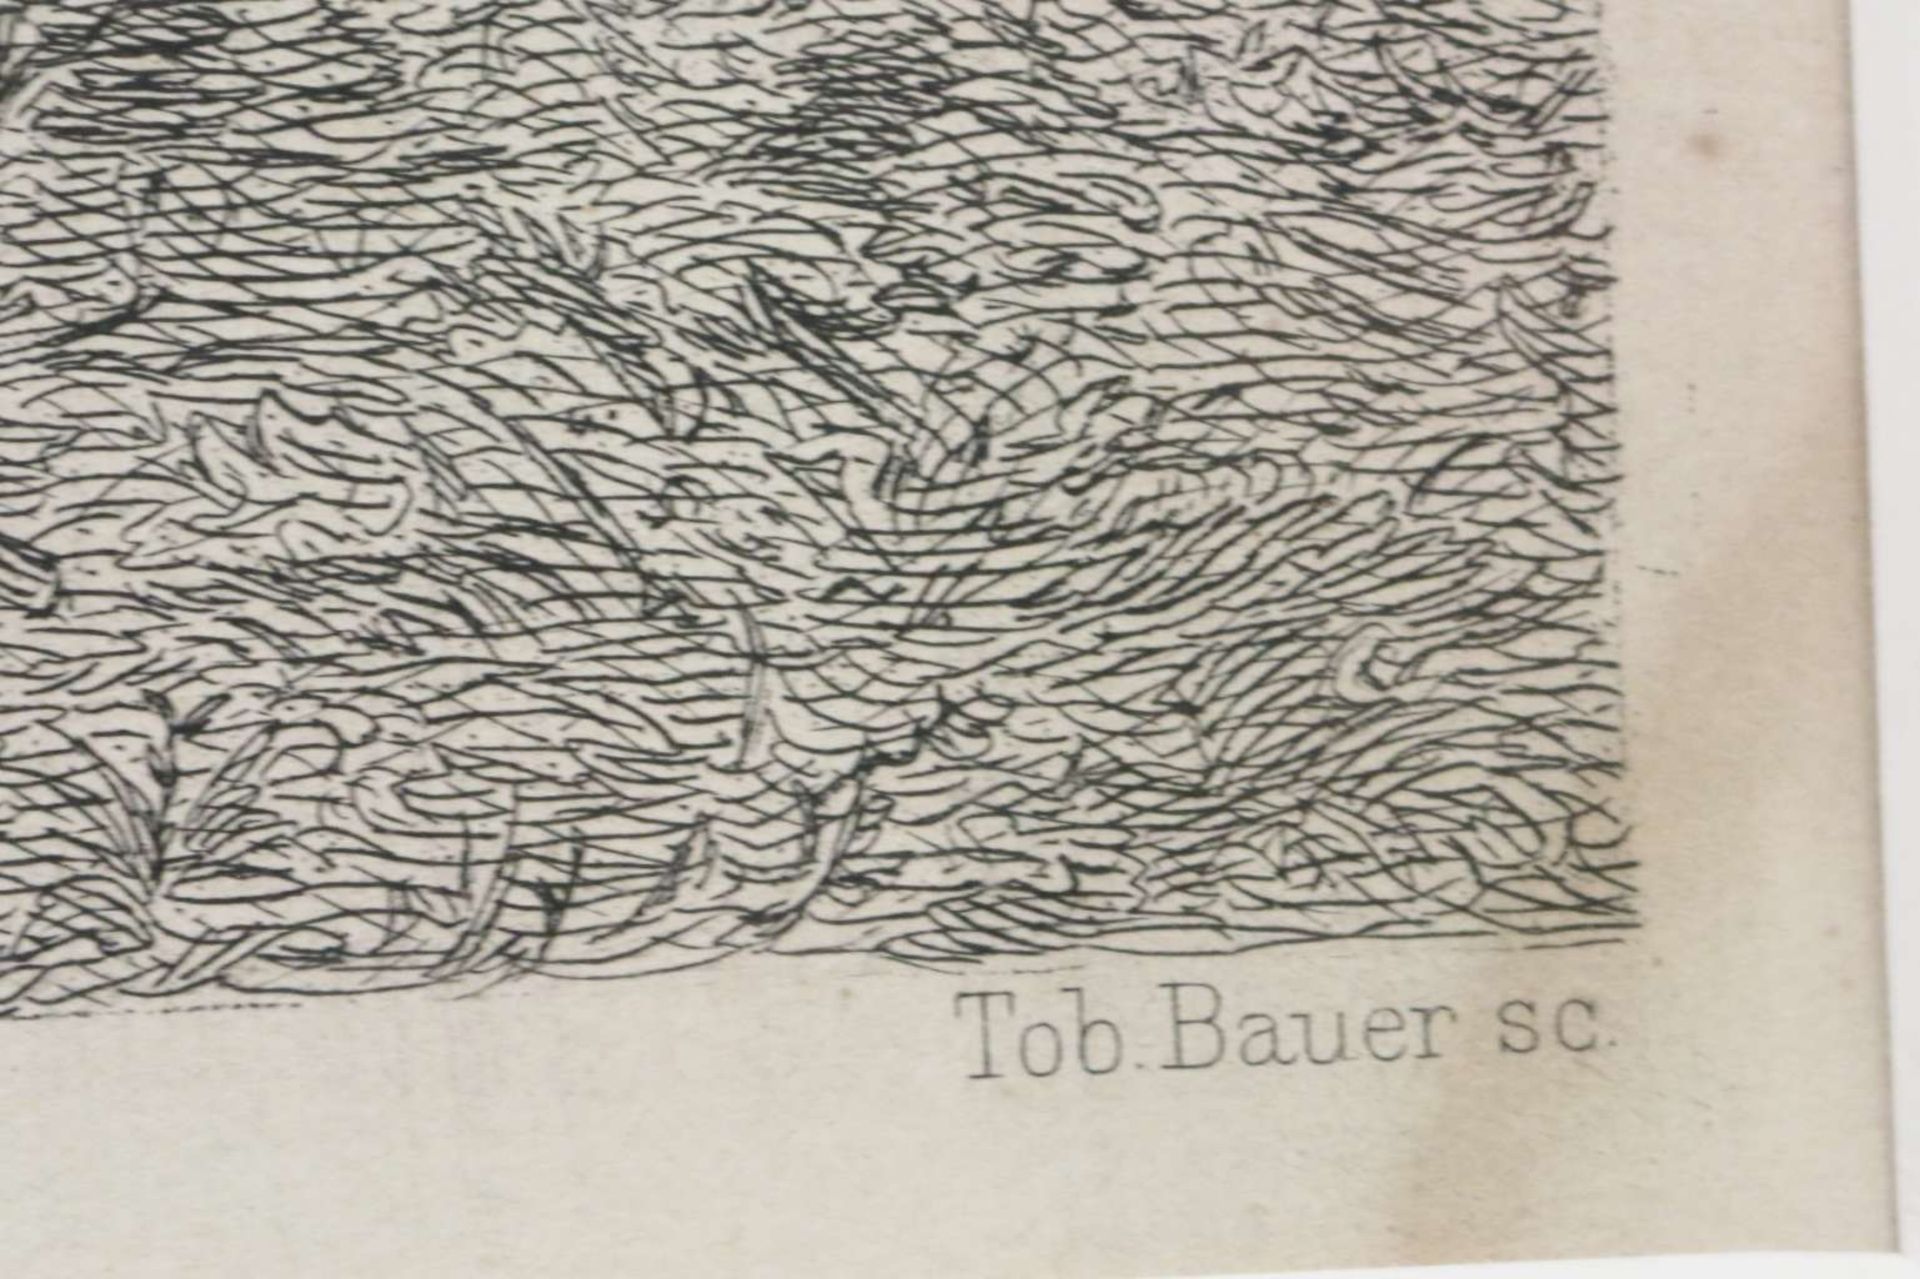 Franz ADAM/ Tob. BAUER - Image 4 of 6